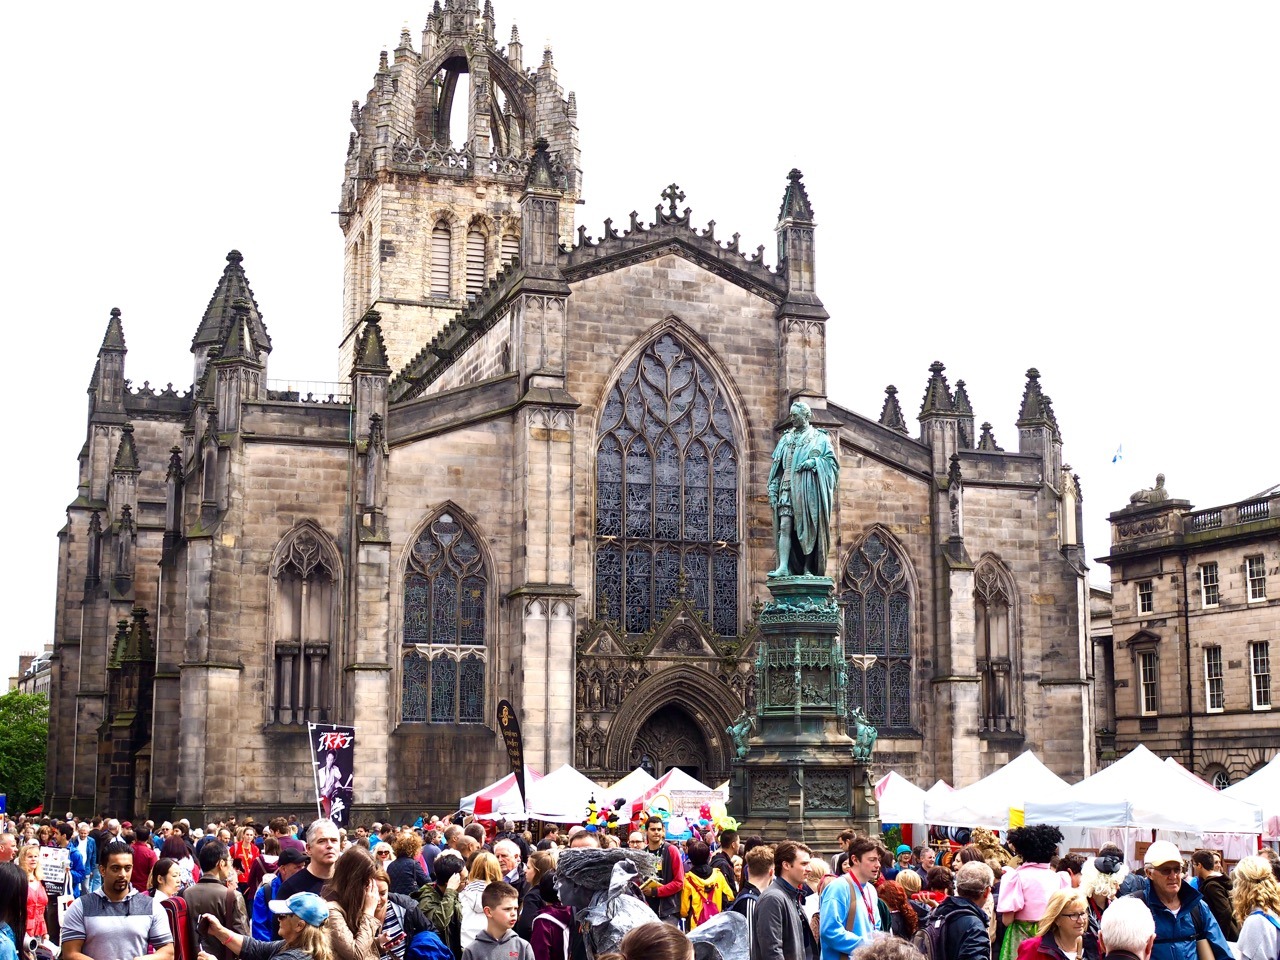 Edinburgh Festivals